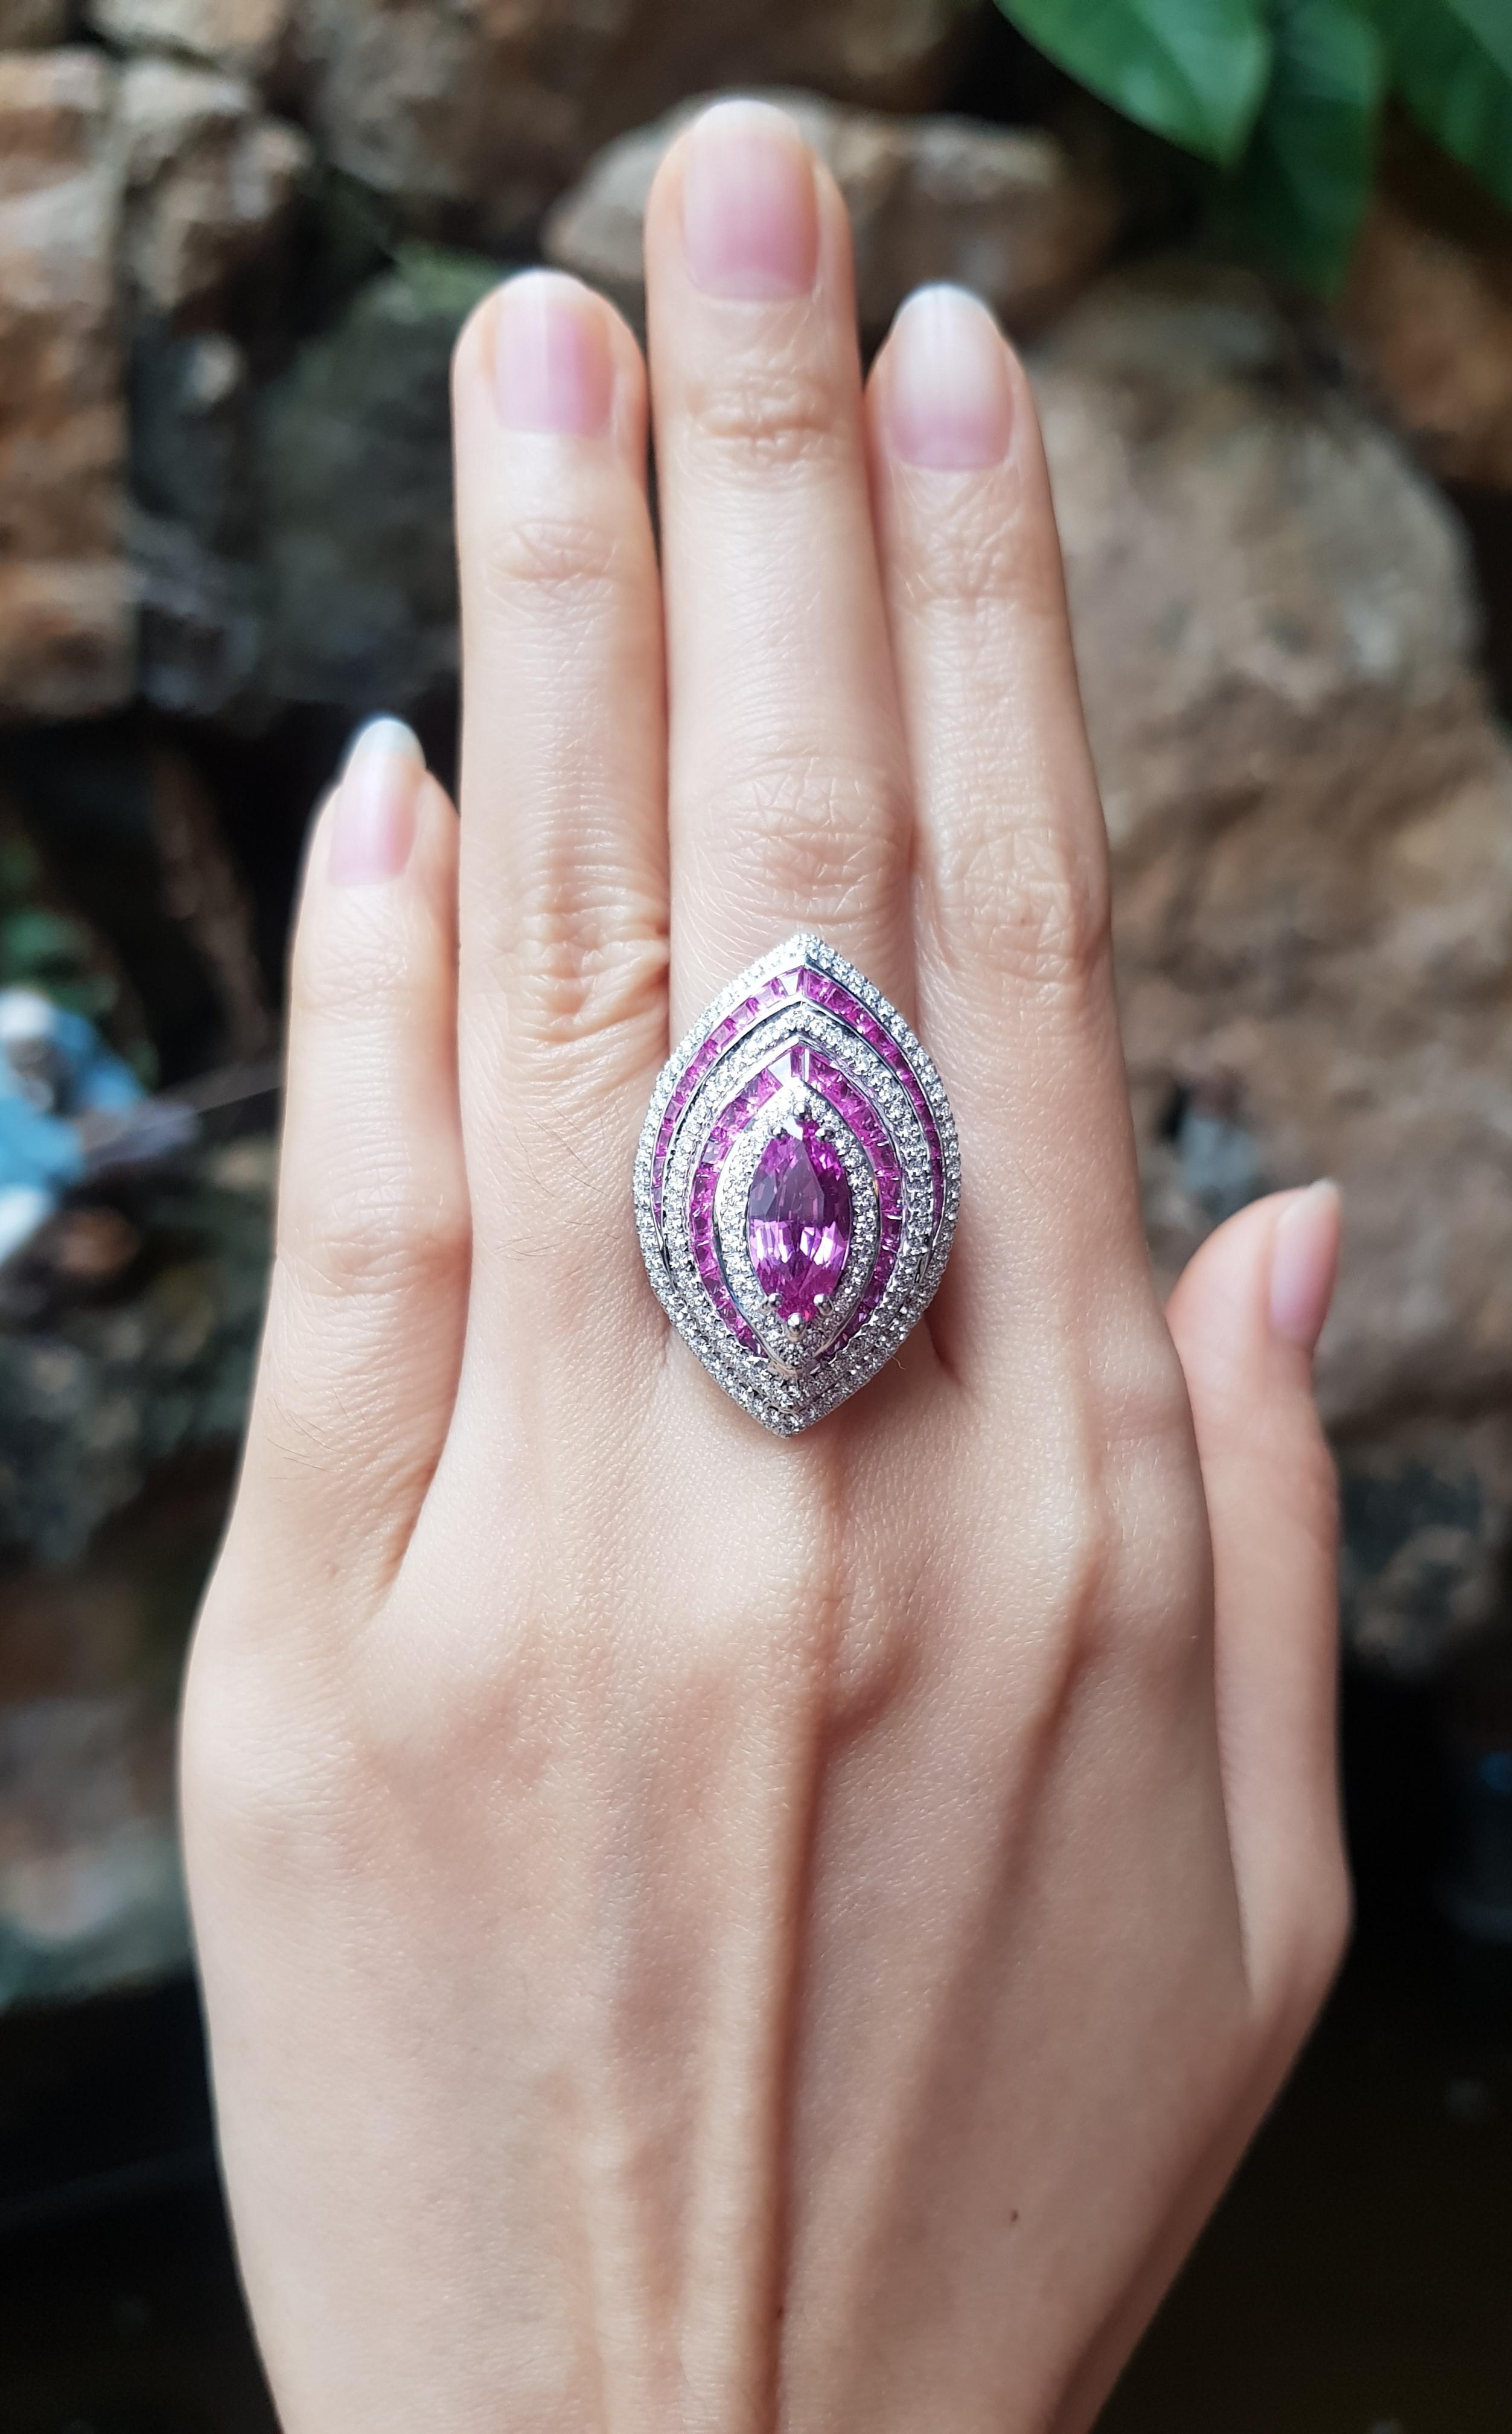 Pink Sapphire 2.65 carats, Pink Sapphire 2.80 carats with Diamond 1.5 carats Ring set in 18 Karat White Gold Settings

Width:  2.2 cm 
Length: 3.2 cm
Ring Size: 53
Total Weight: 14.34 grams

